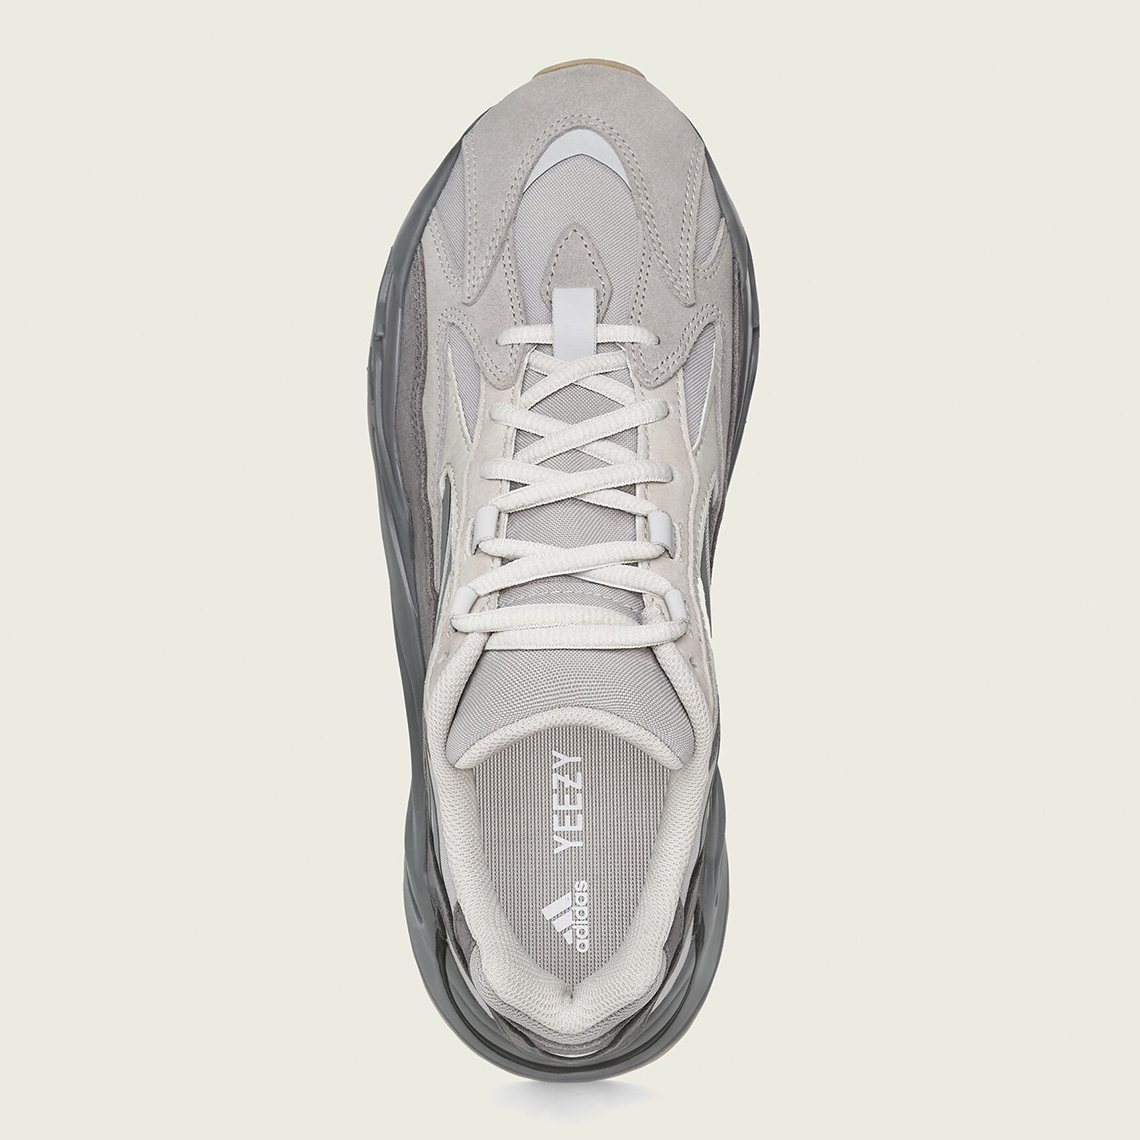 adidas Yeezy 700 v2 Tephra FU7914 Release Date | SneakerNews.com